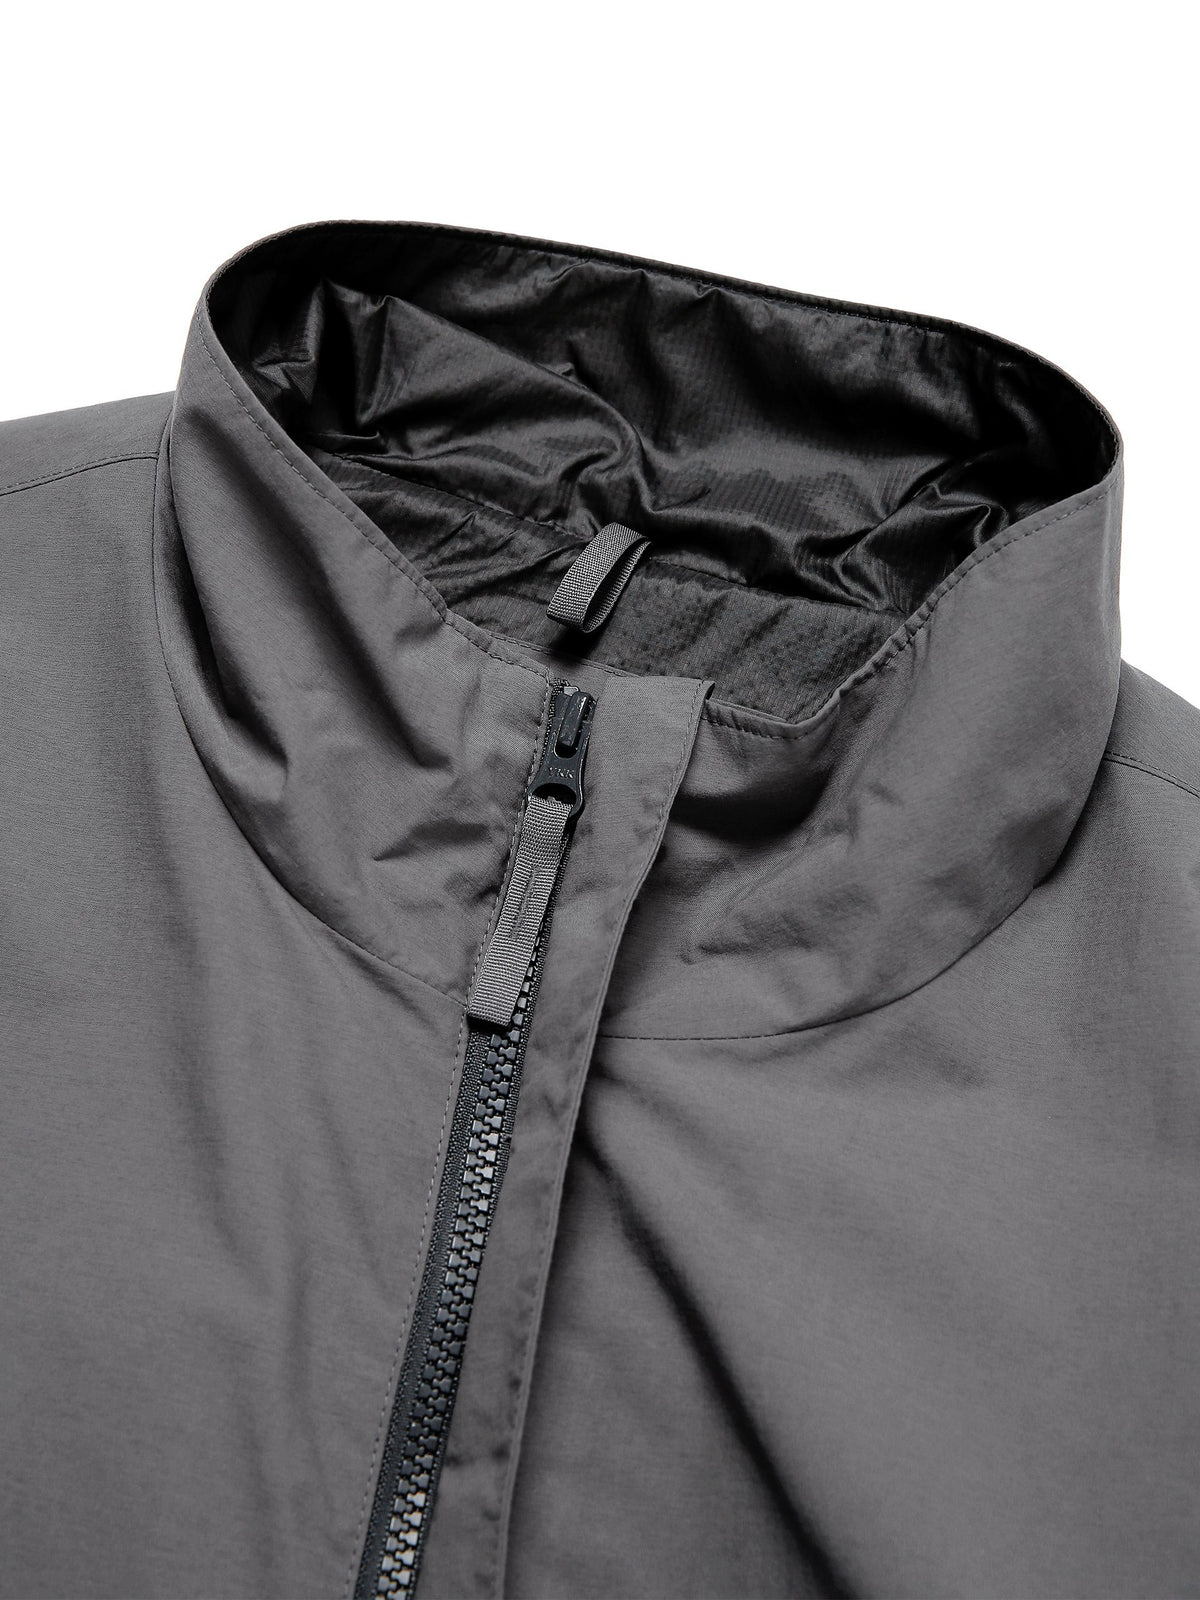 PERTEX® UL Jacket Outerwear 